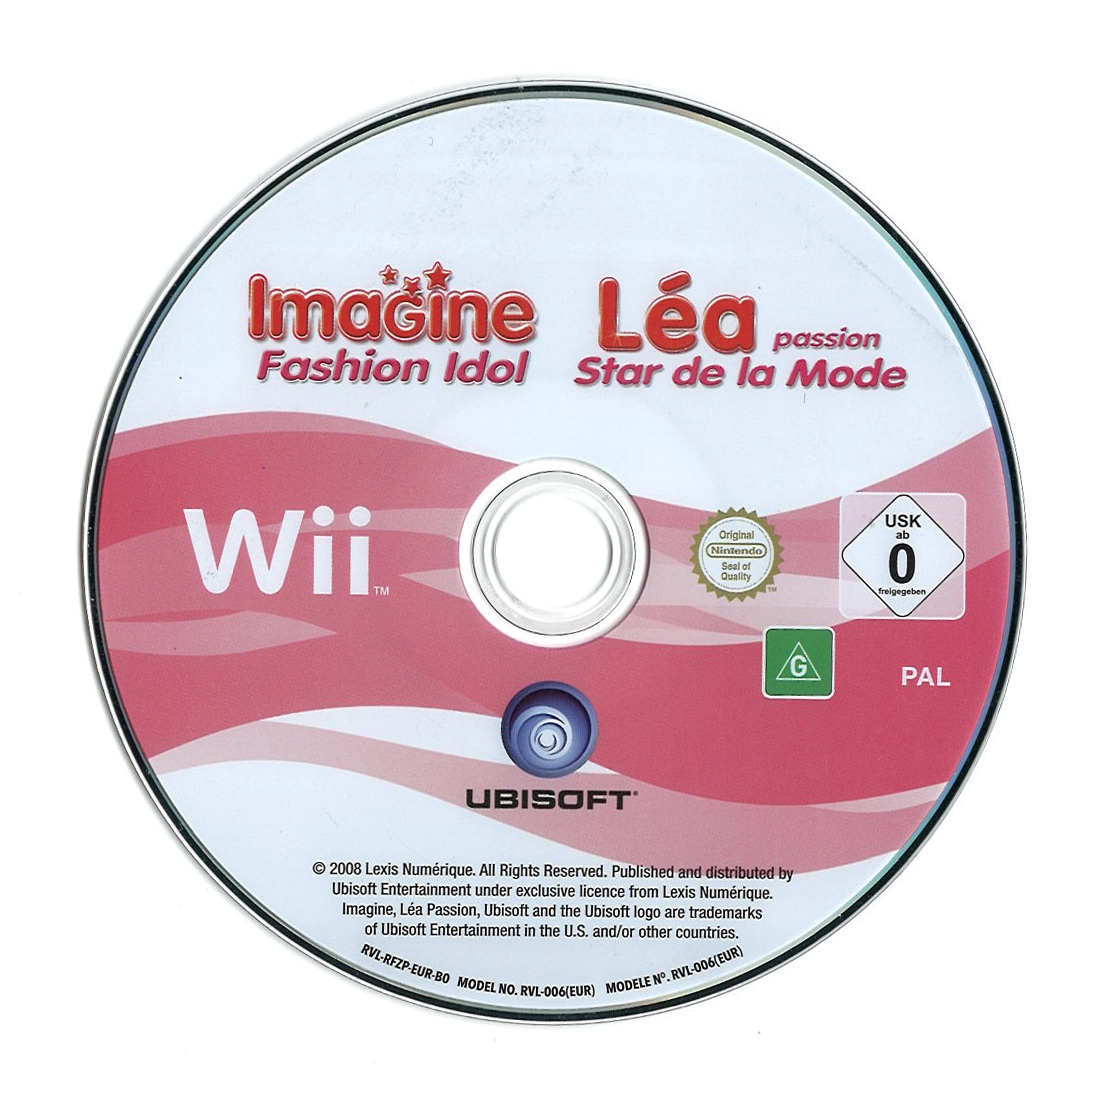 Ubisoft Imagine Fashion Idol (losse disc)